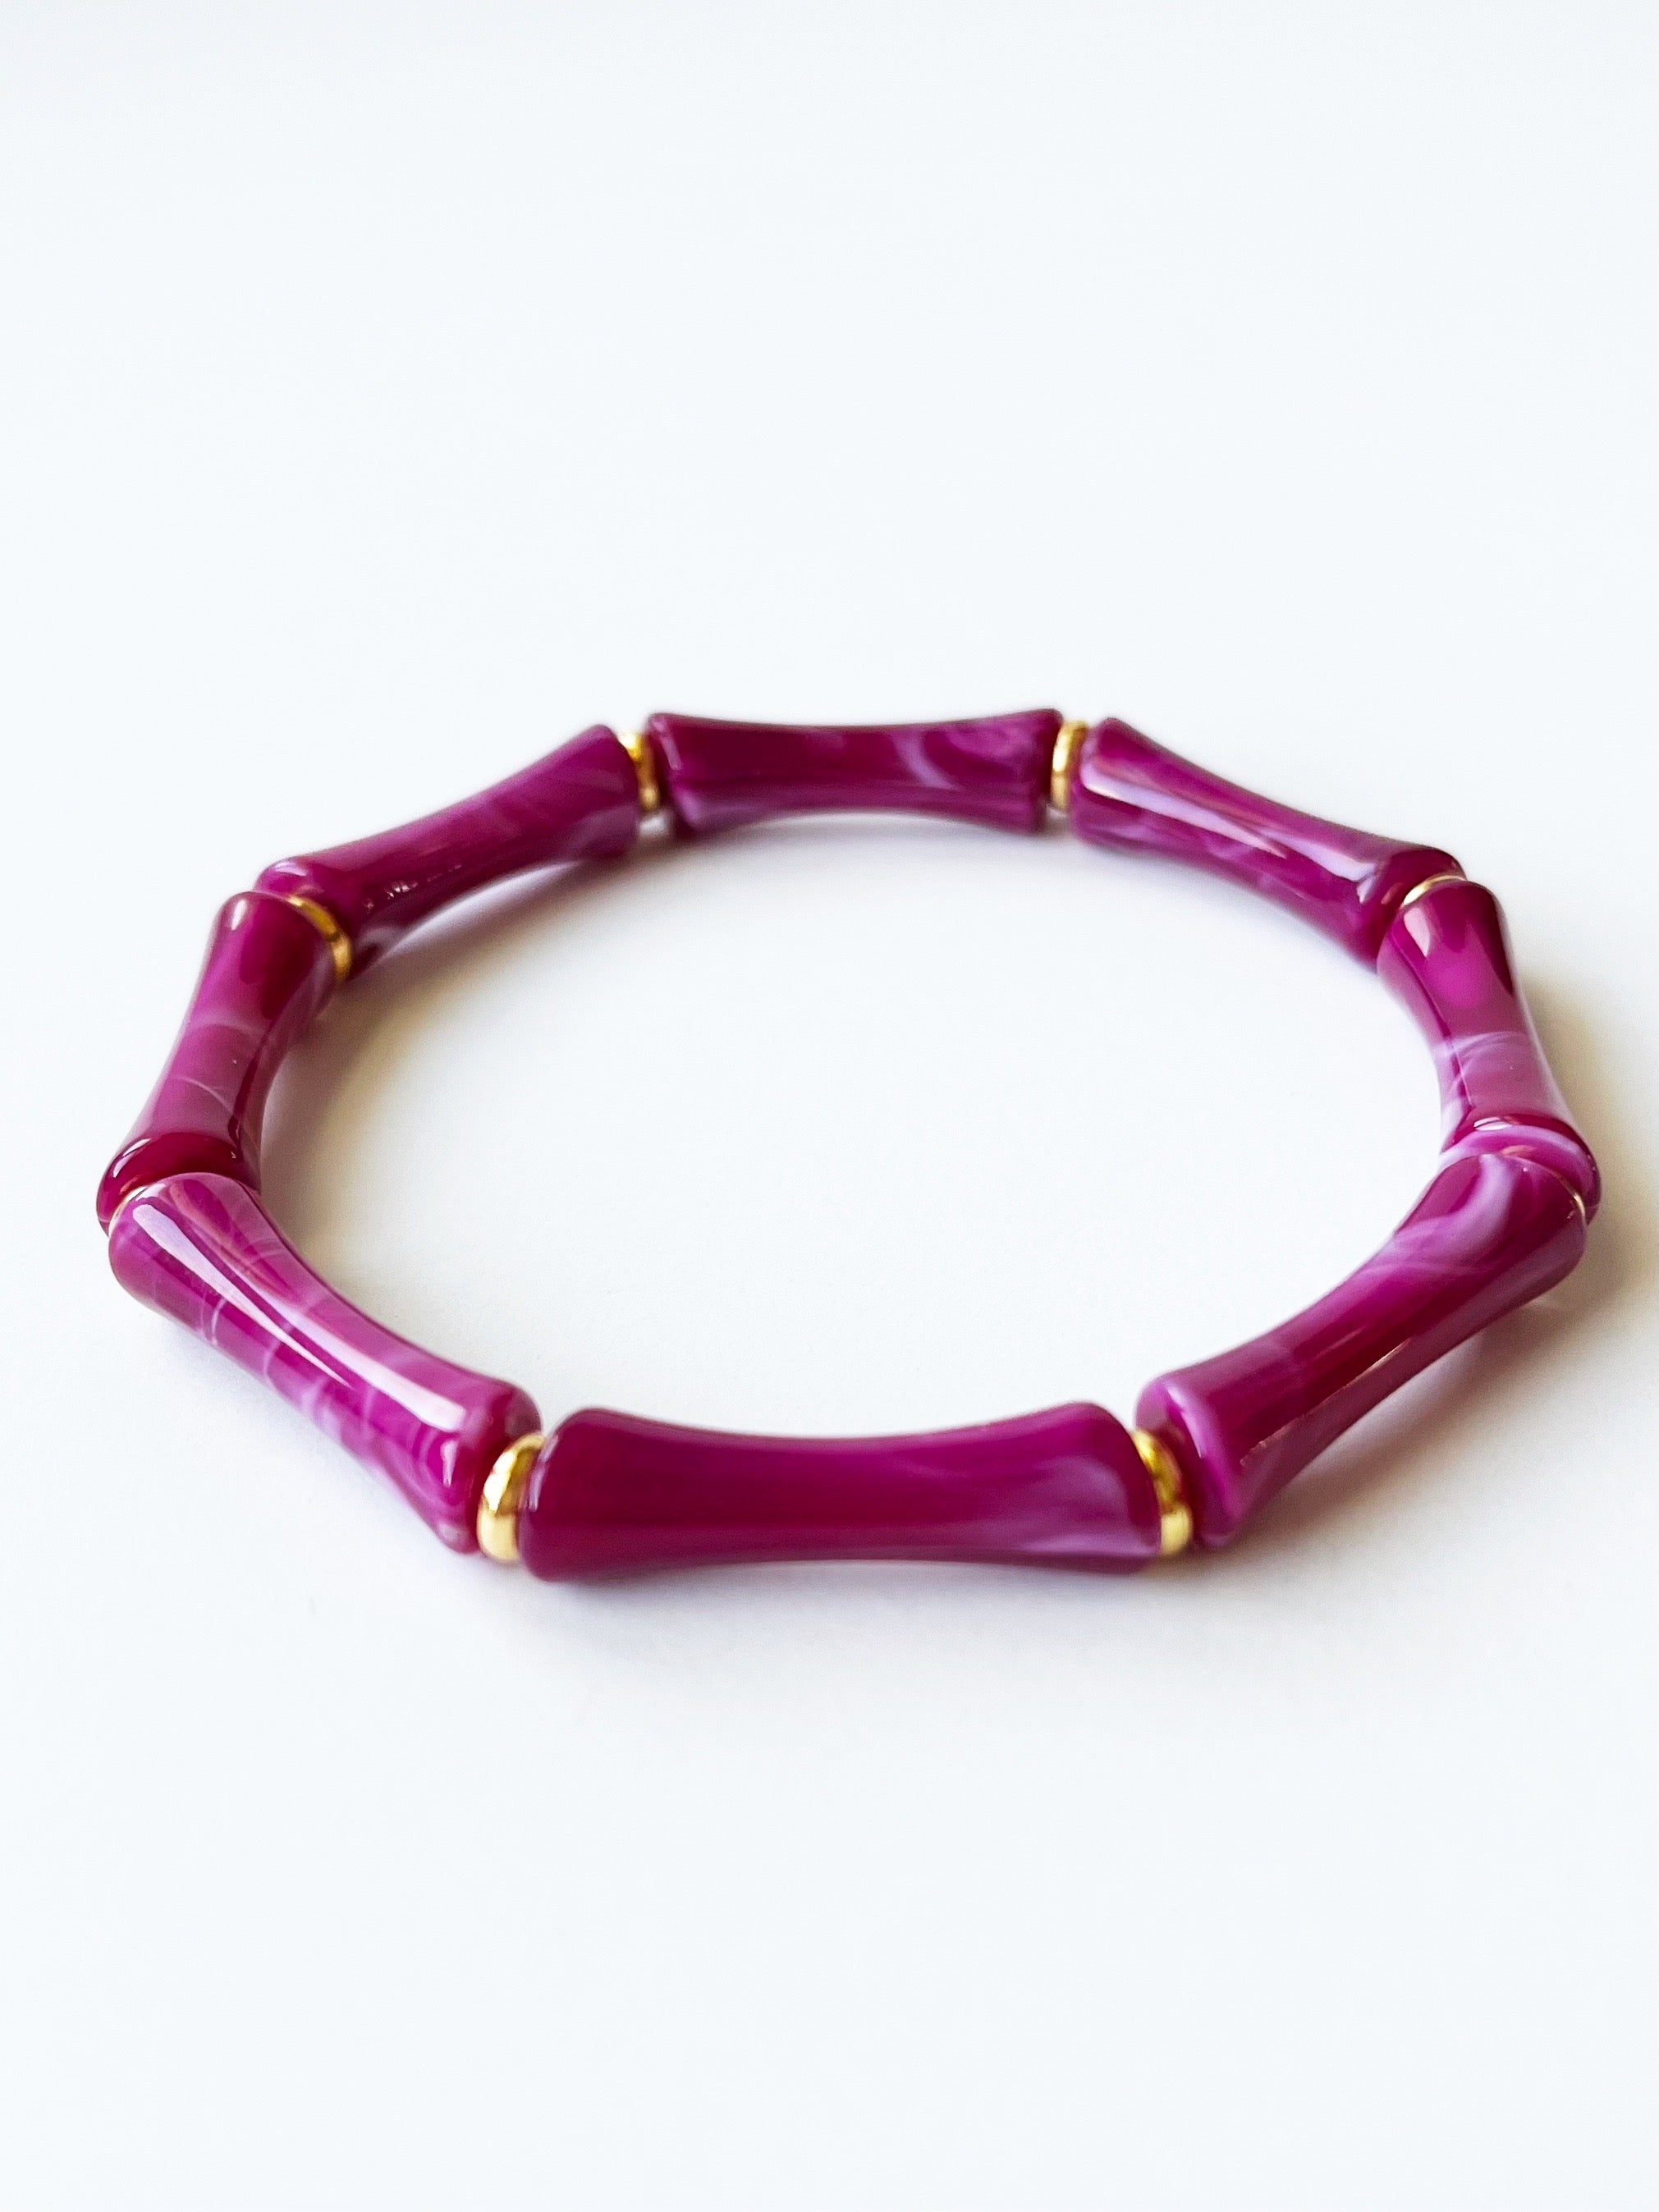 sangria acrylic bangle bracelet